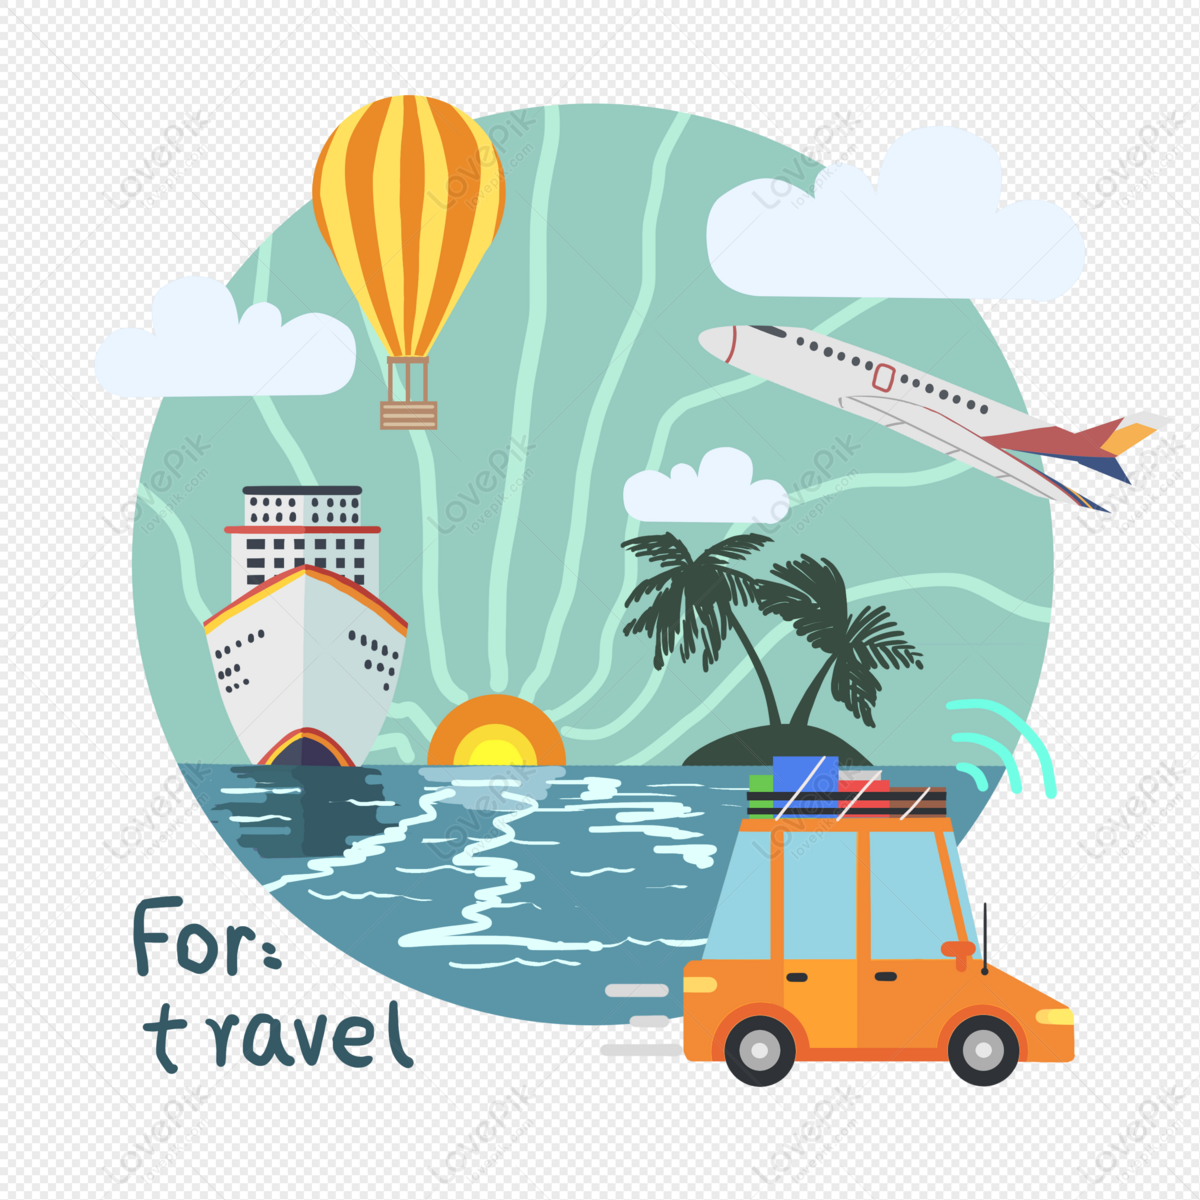 Travel theme illustration, airplane travel, travel vector, map travel png transparent image